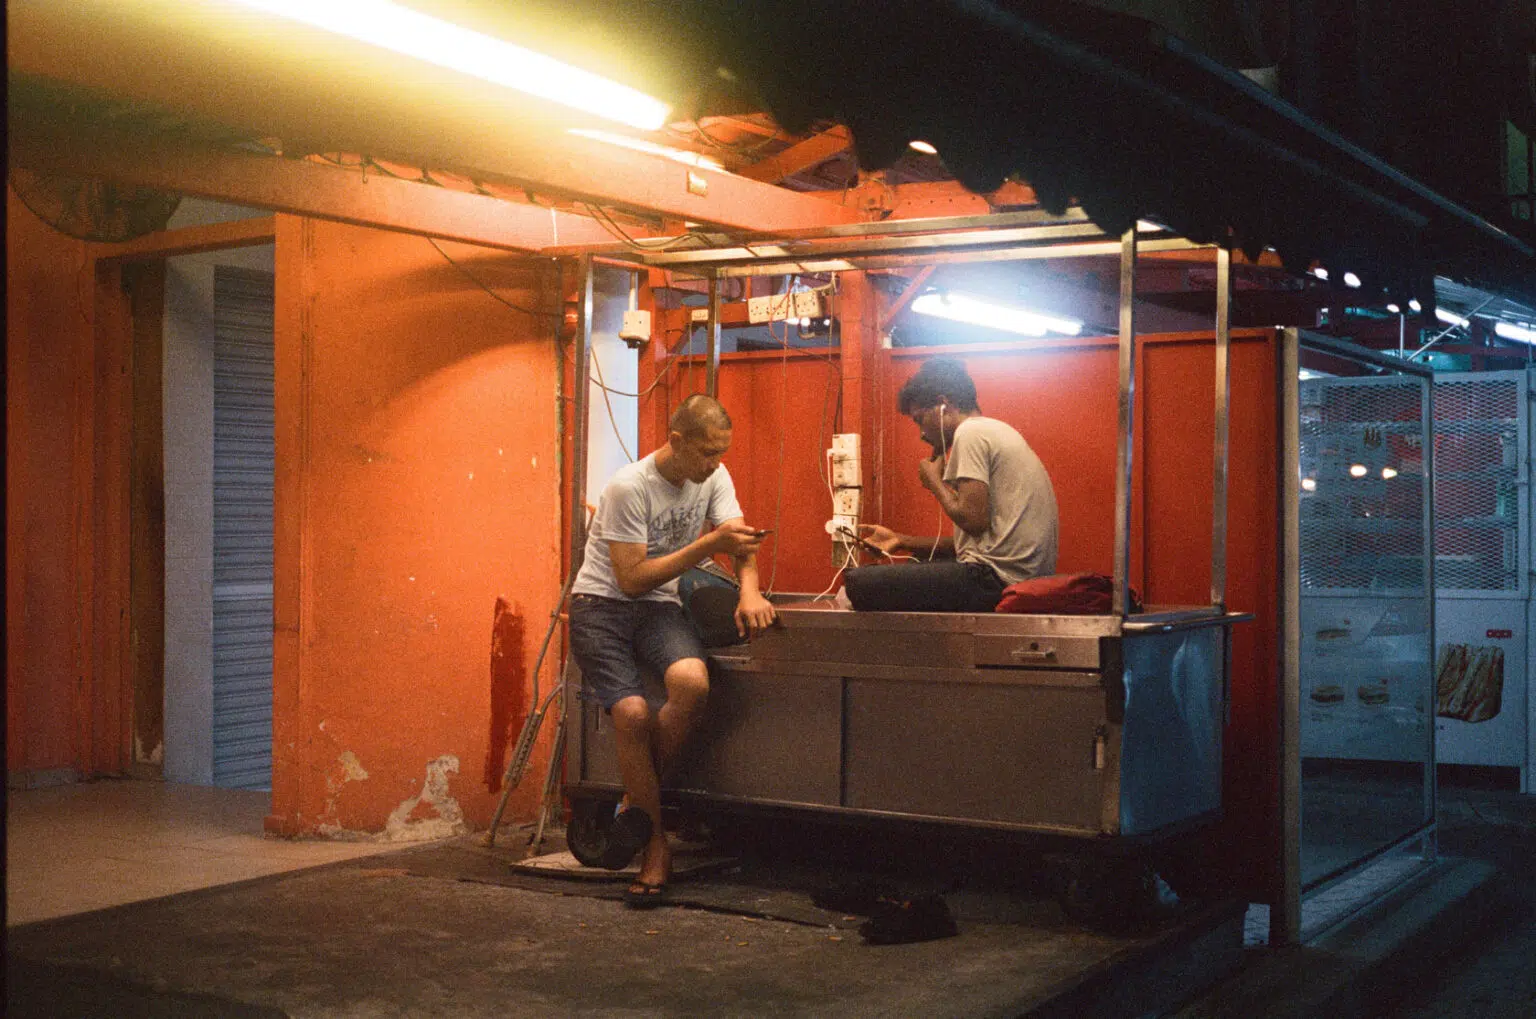 Petaling Street Night Street Photography Film Kodak Vision3 500T